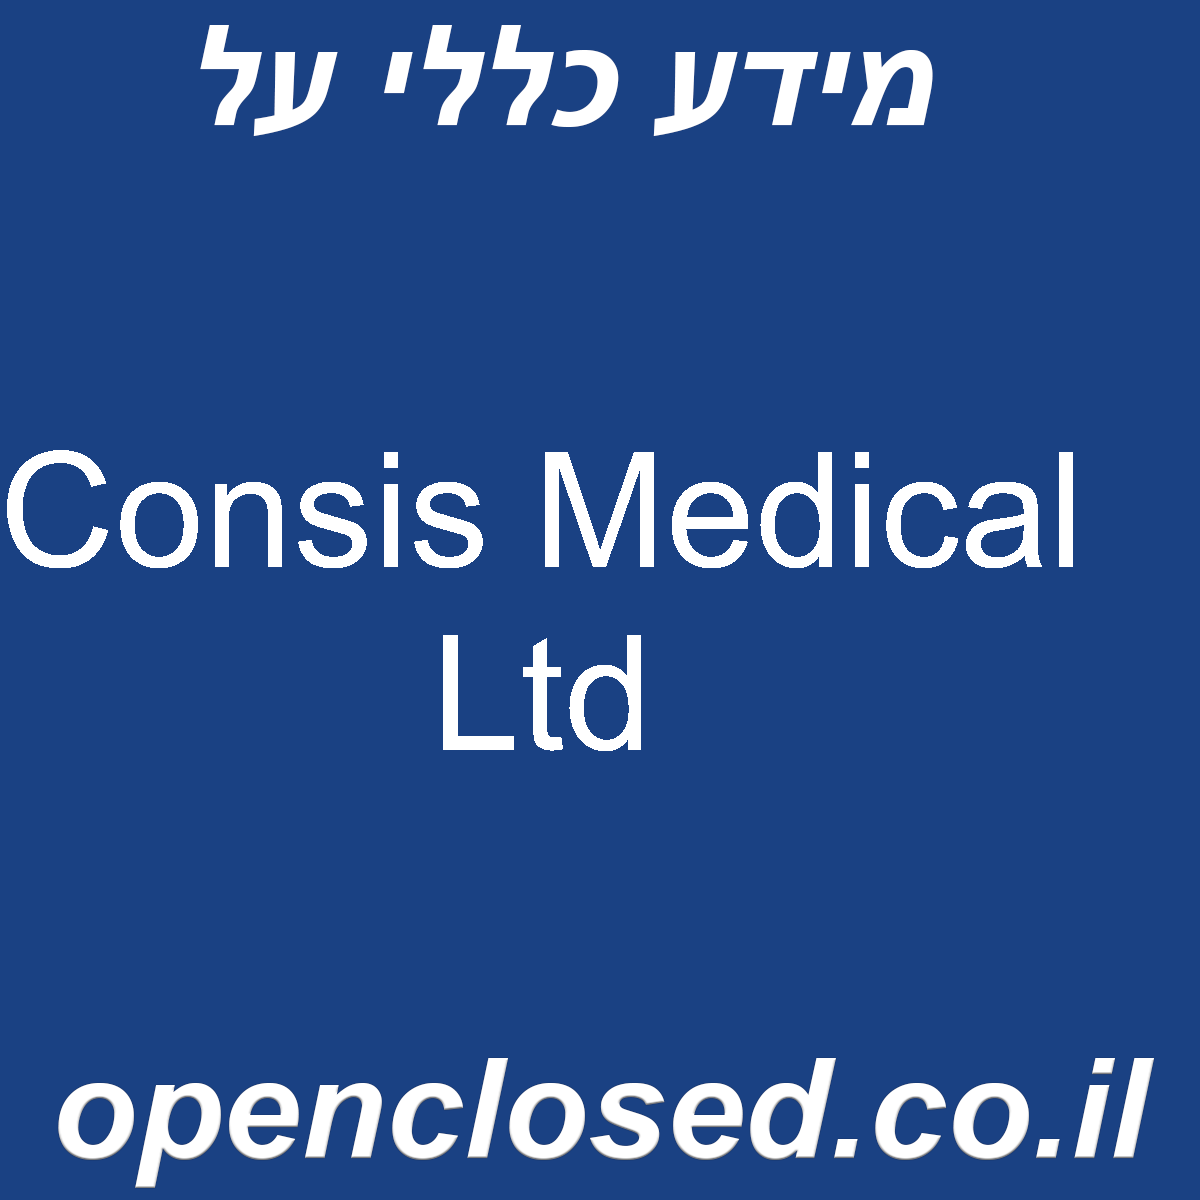 Consis Medical Ltd